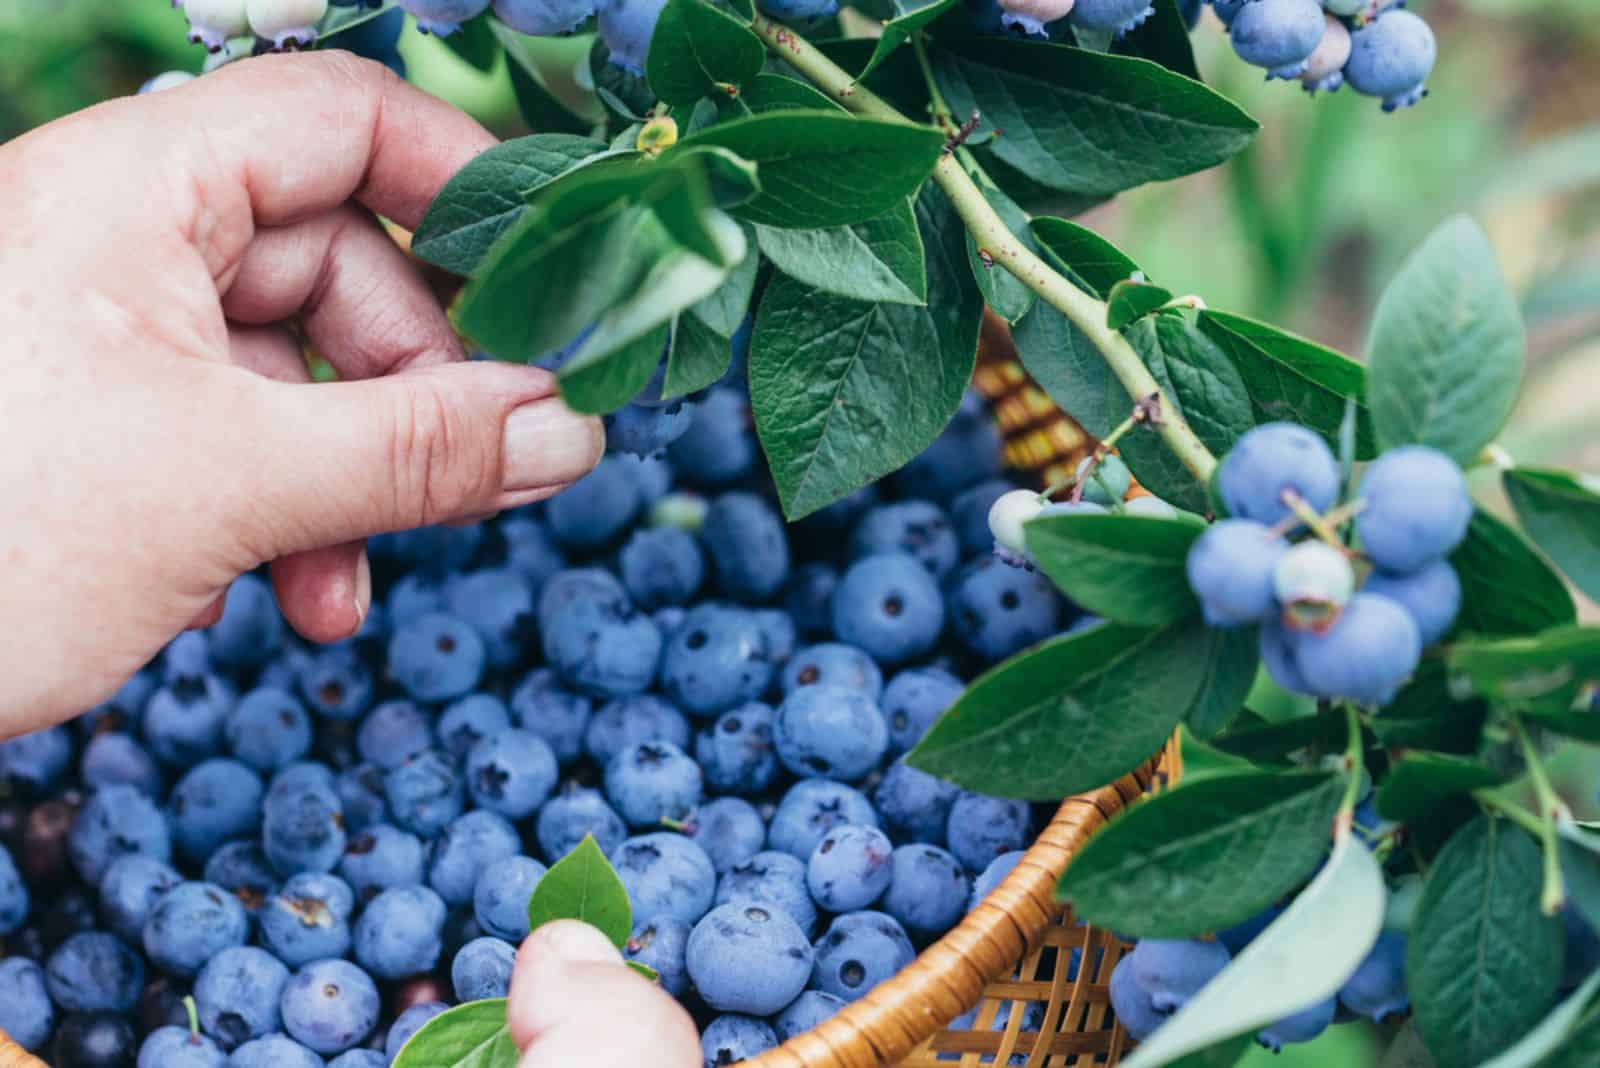 Women's hands picking ripe blueberries